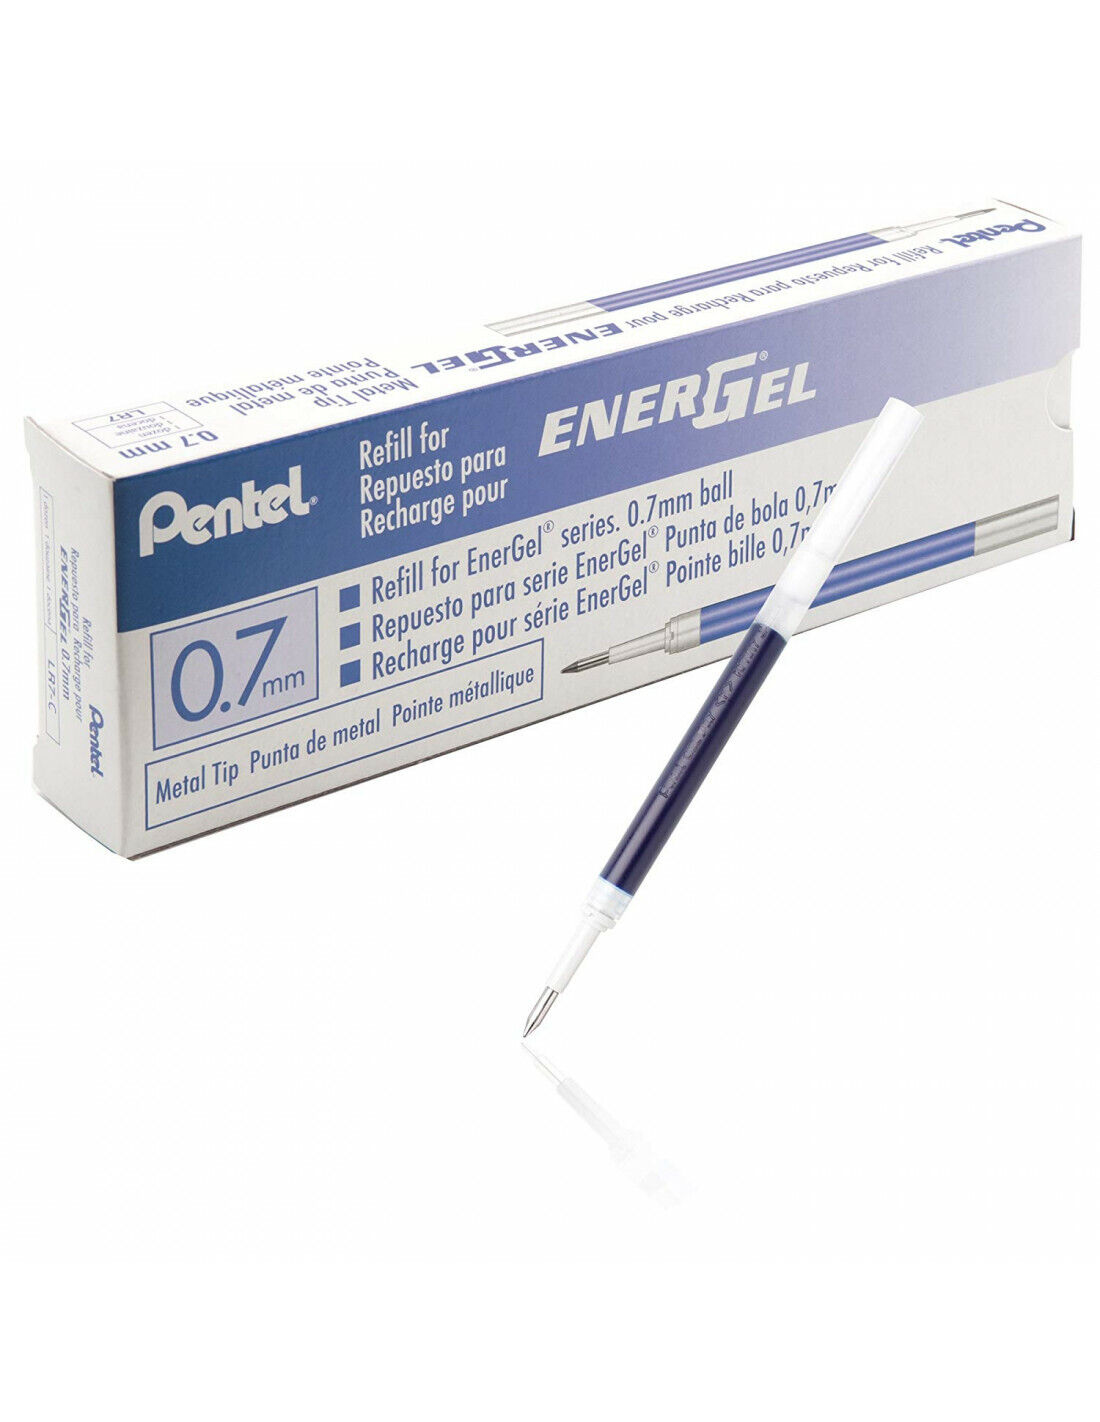 20 X Pentel LR7 Roller Refill for EnerGel Gel Pen 0.7mm Metal Tip - Blue Ink